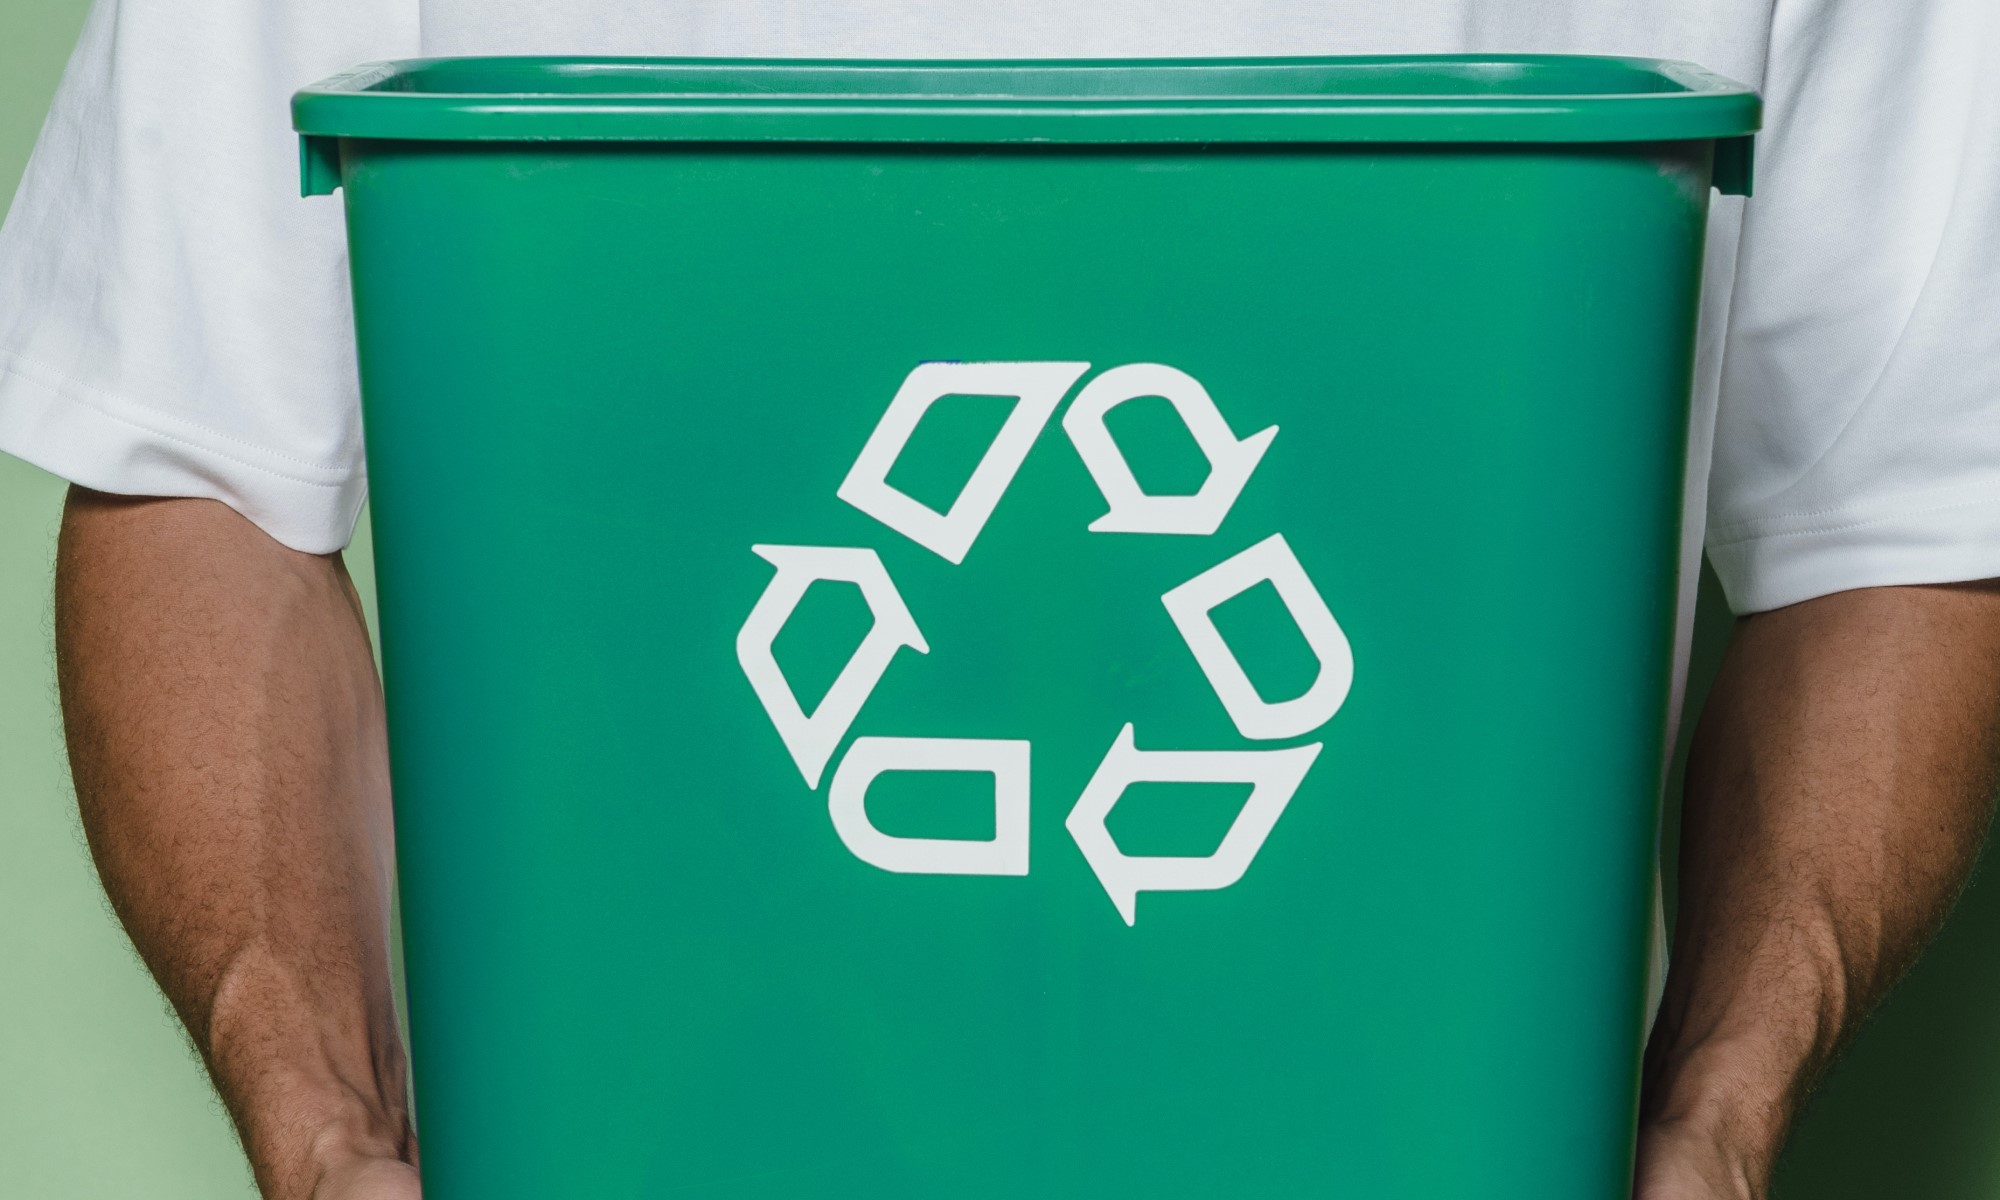 Marketing - EQ Cores & Recycling